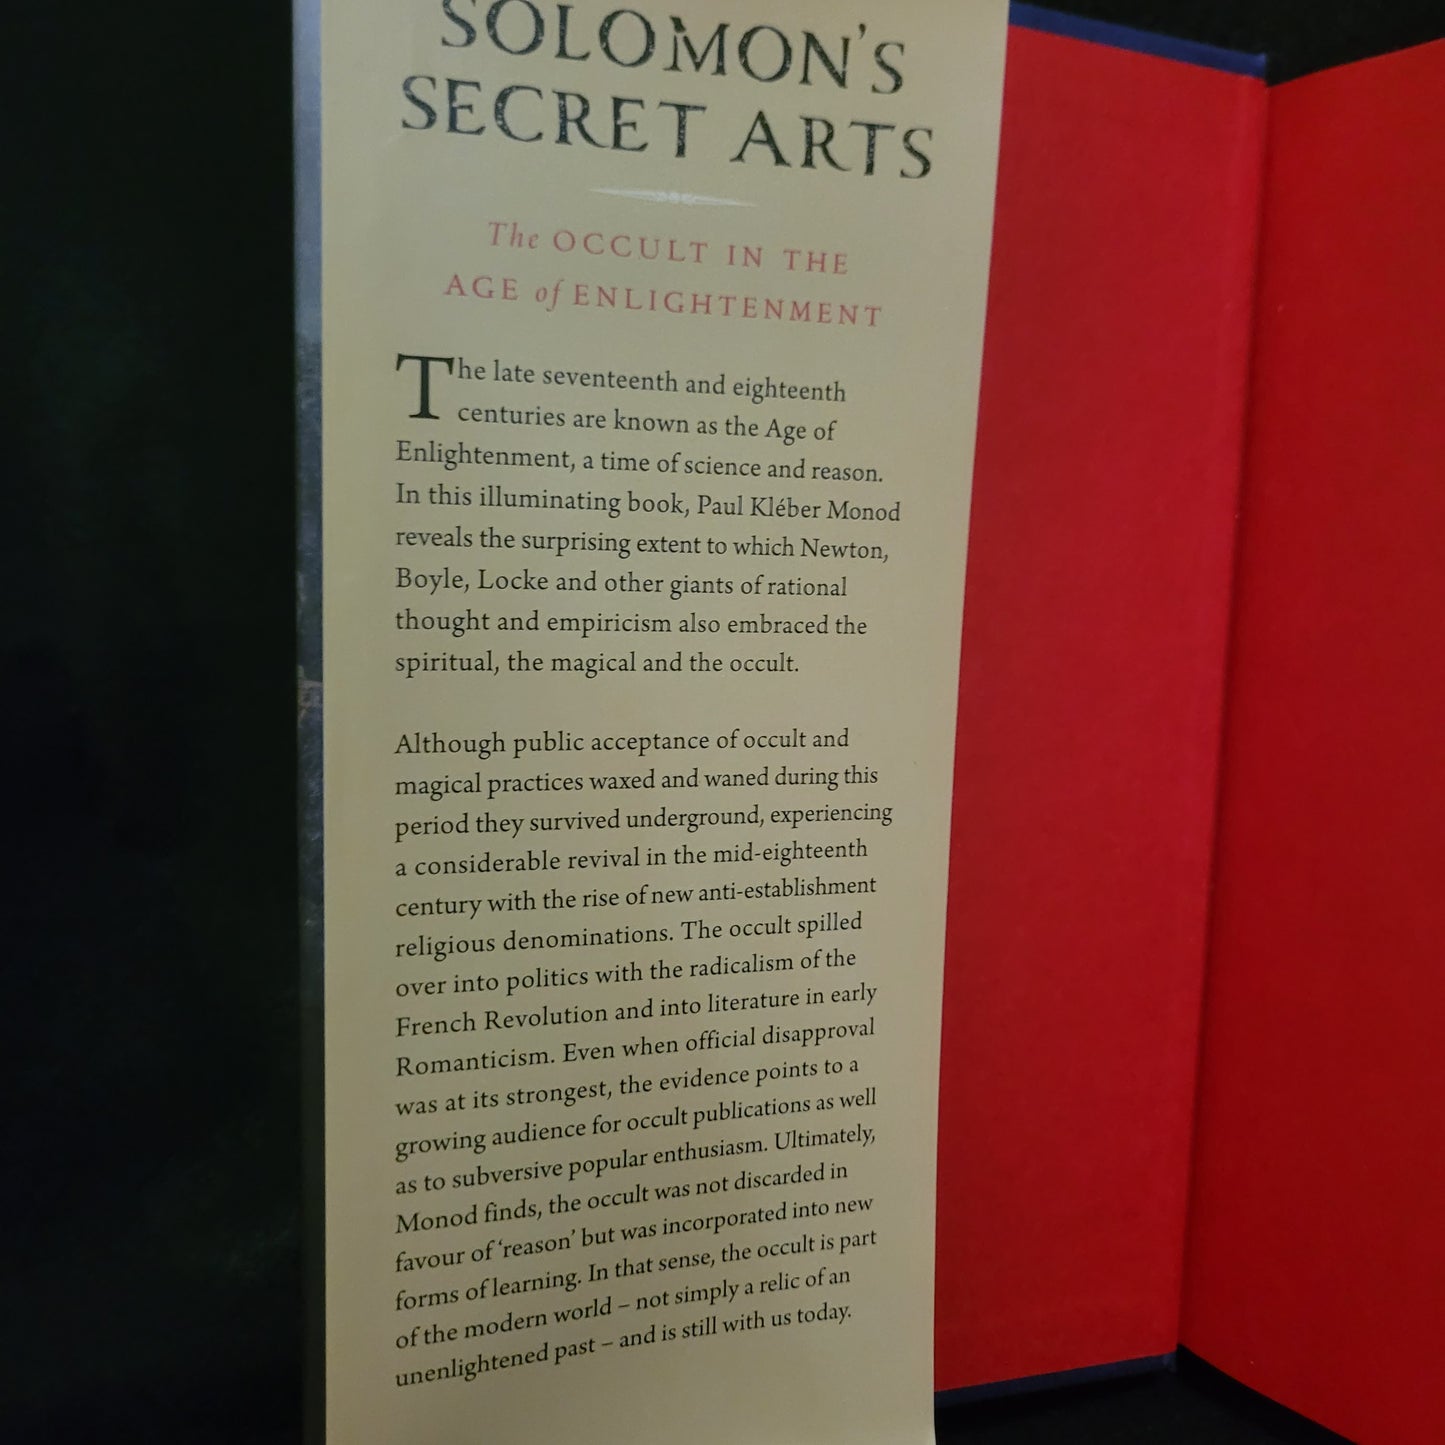 Solomon's Secret Art: The Occult in the Age of Enlightenment by Paul Kléber Monod (Yale University Press) Hardcover